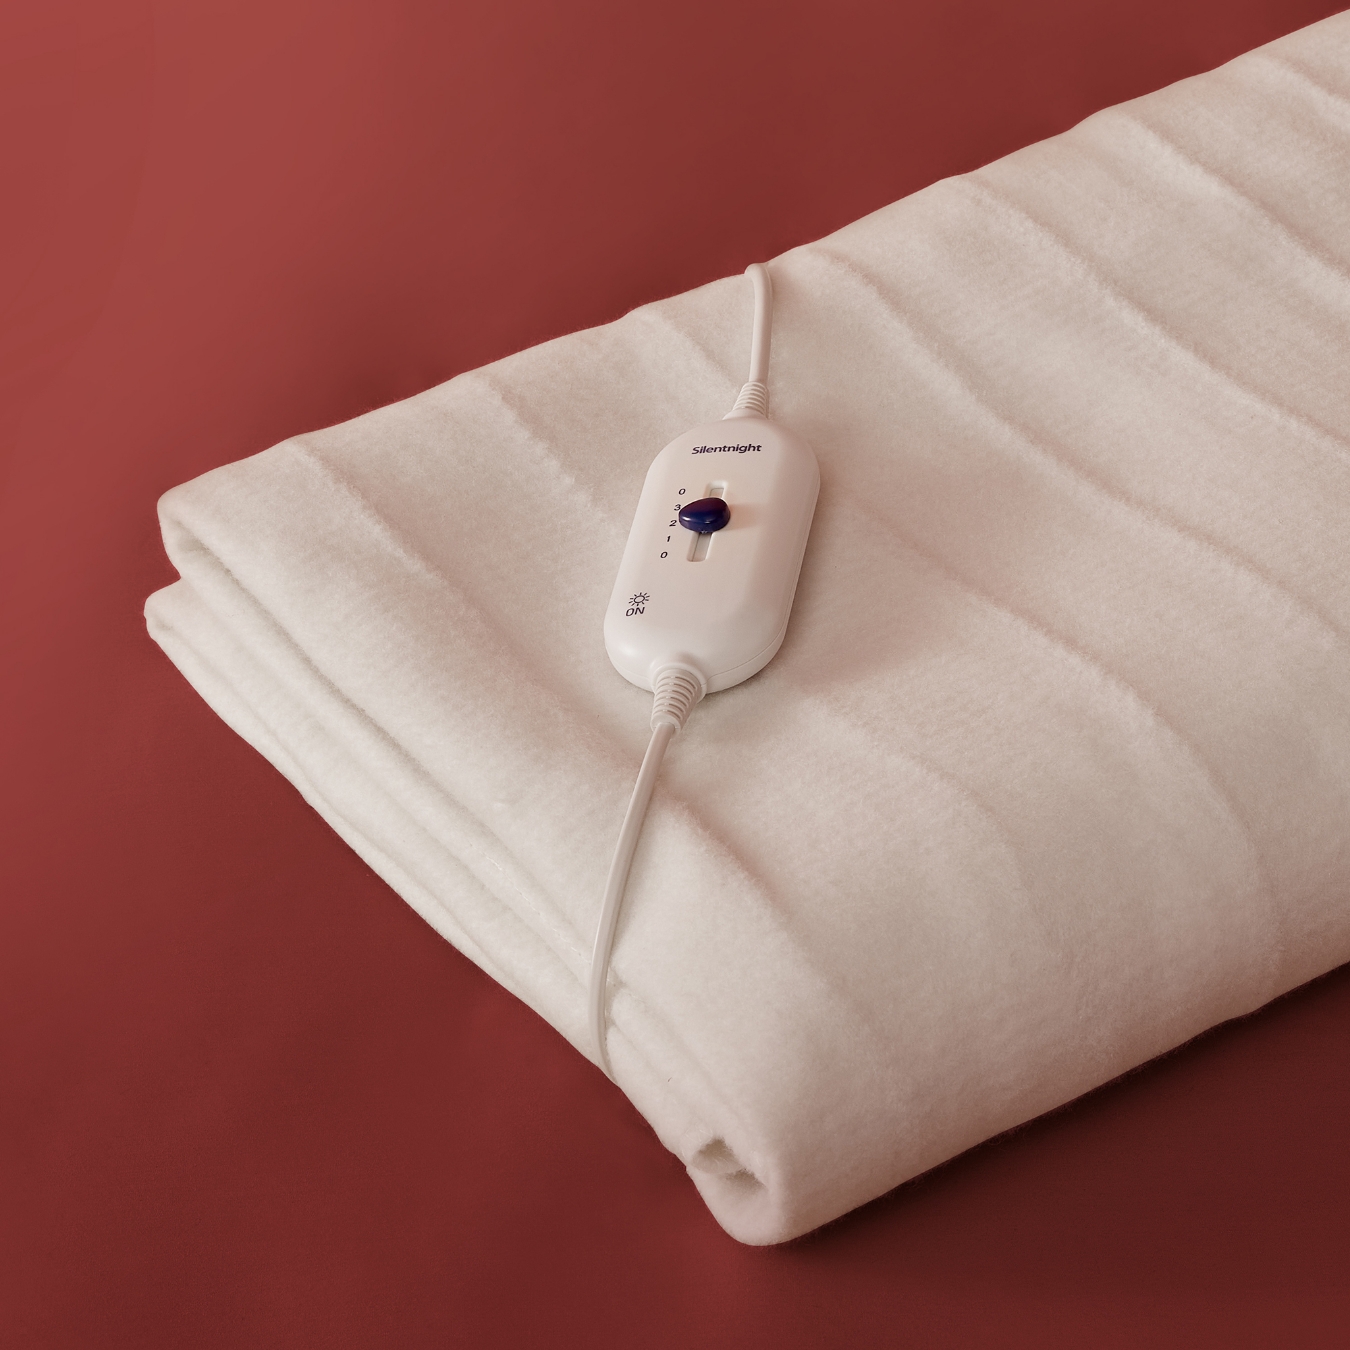 An image of Silentnight Comfort Control Electric Blanket - Super King